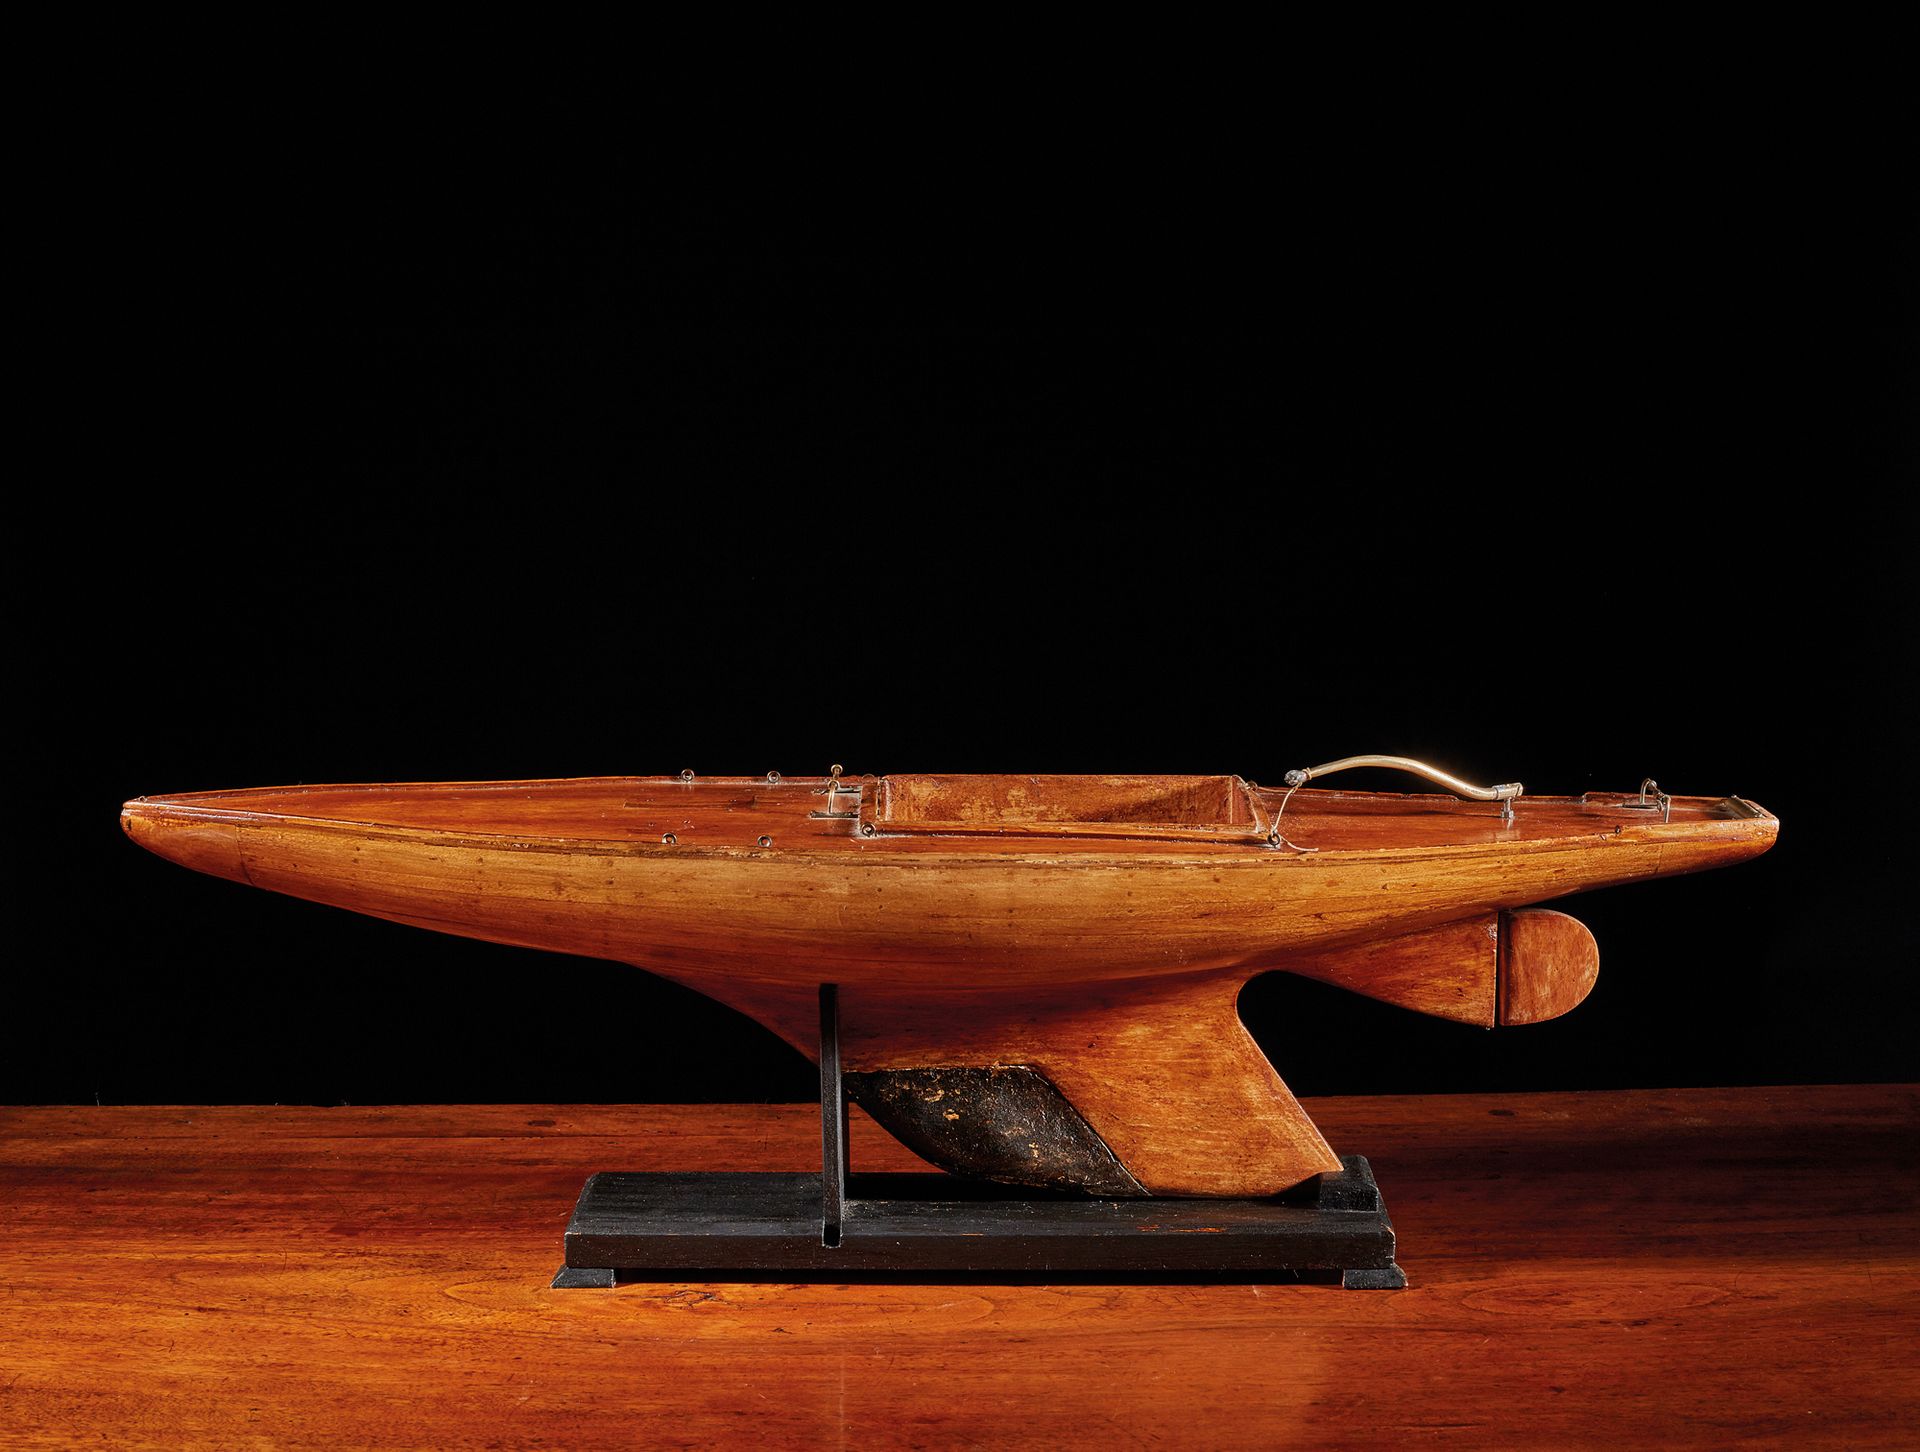 Null Model of a yacht, hull planked in light wood, varnished deck, brass tiller,&hellip;